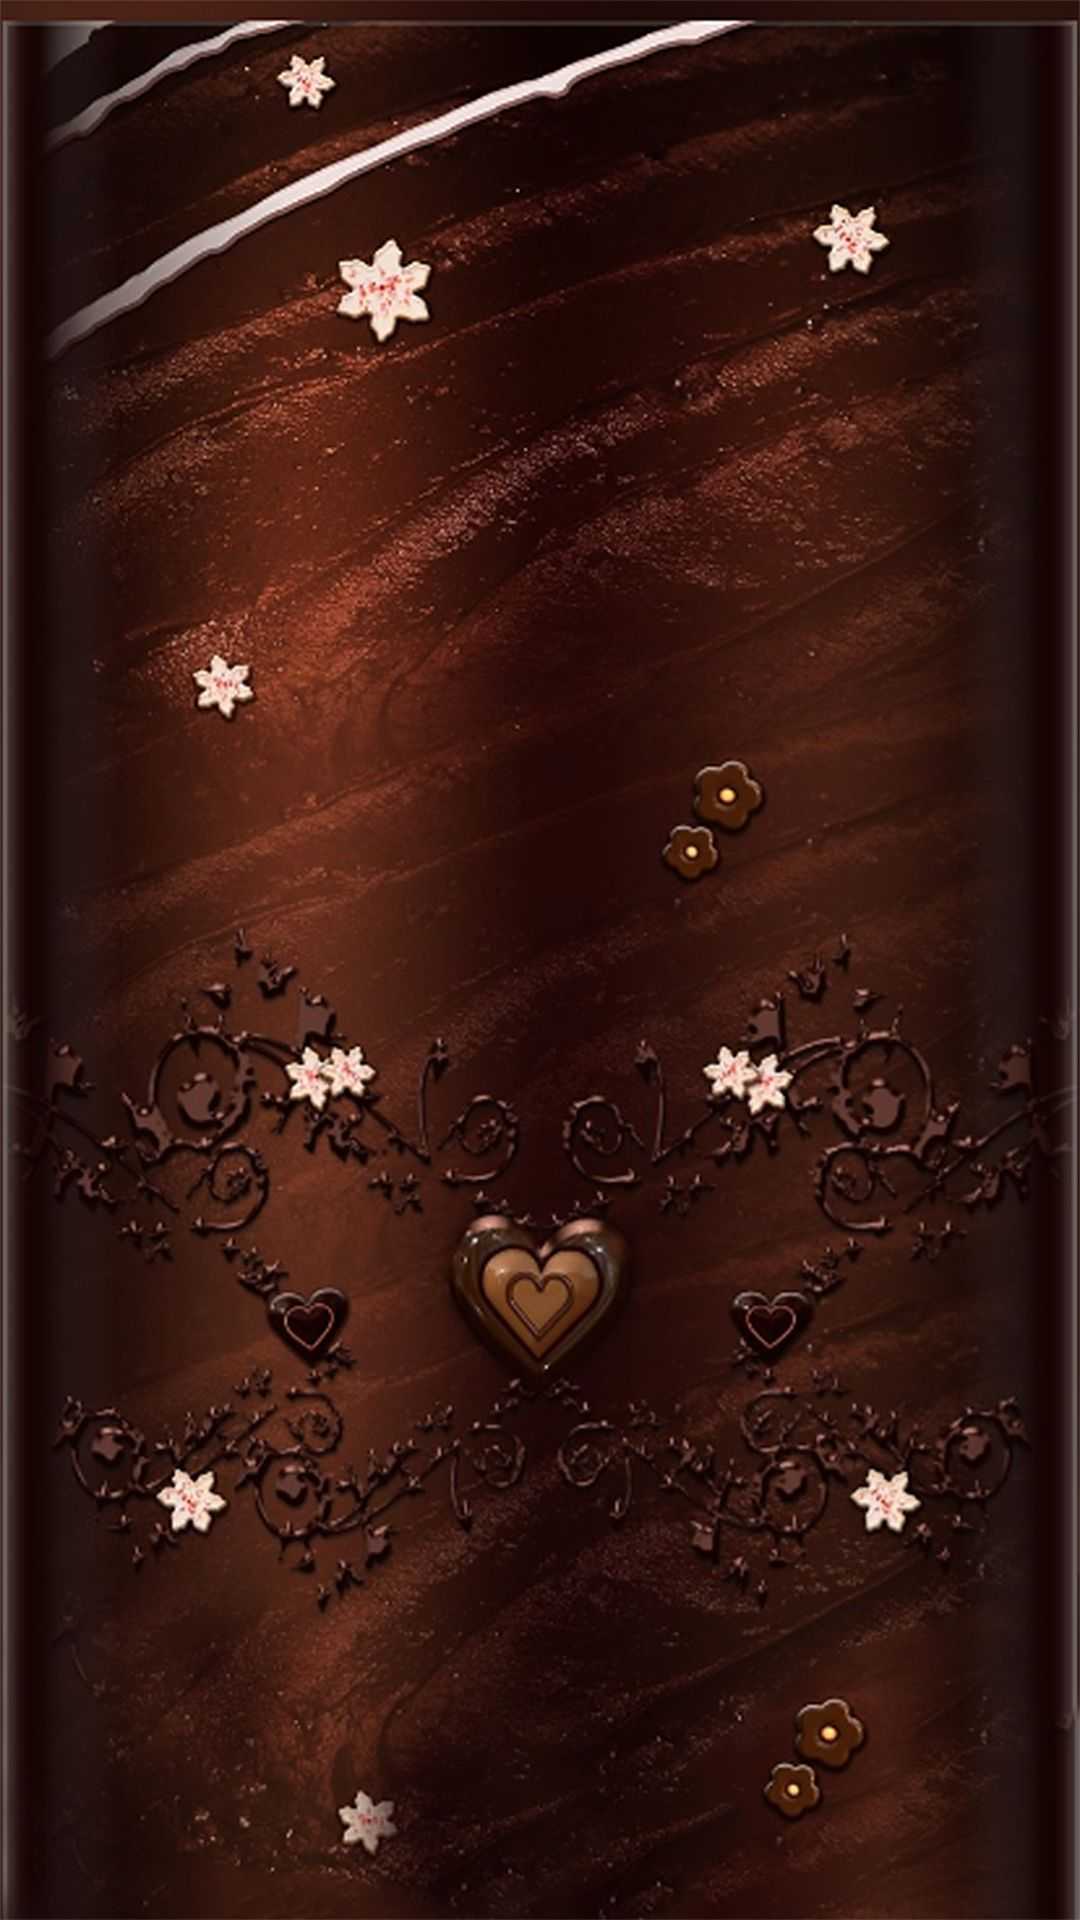 Aesthetic Brown Heart Wallpaper Free HD Wallpaper